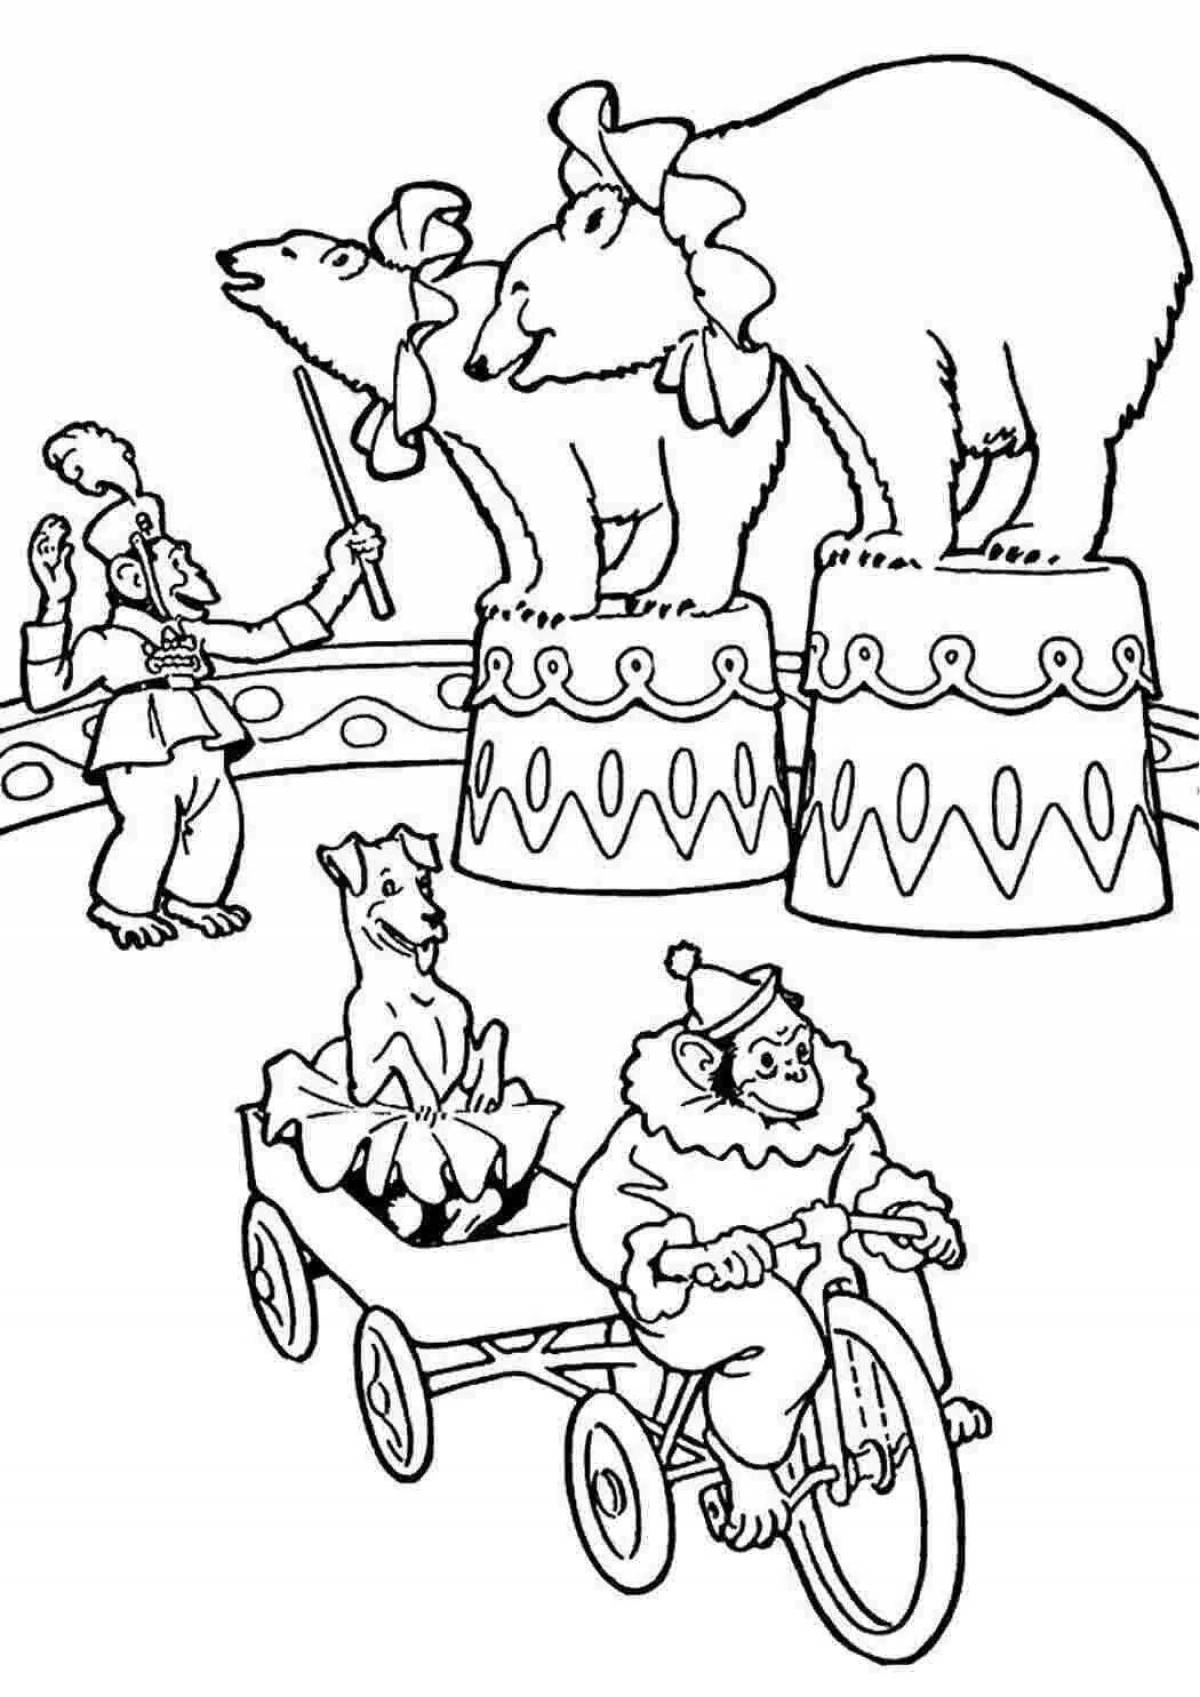 Holiday circus coloring book